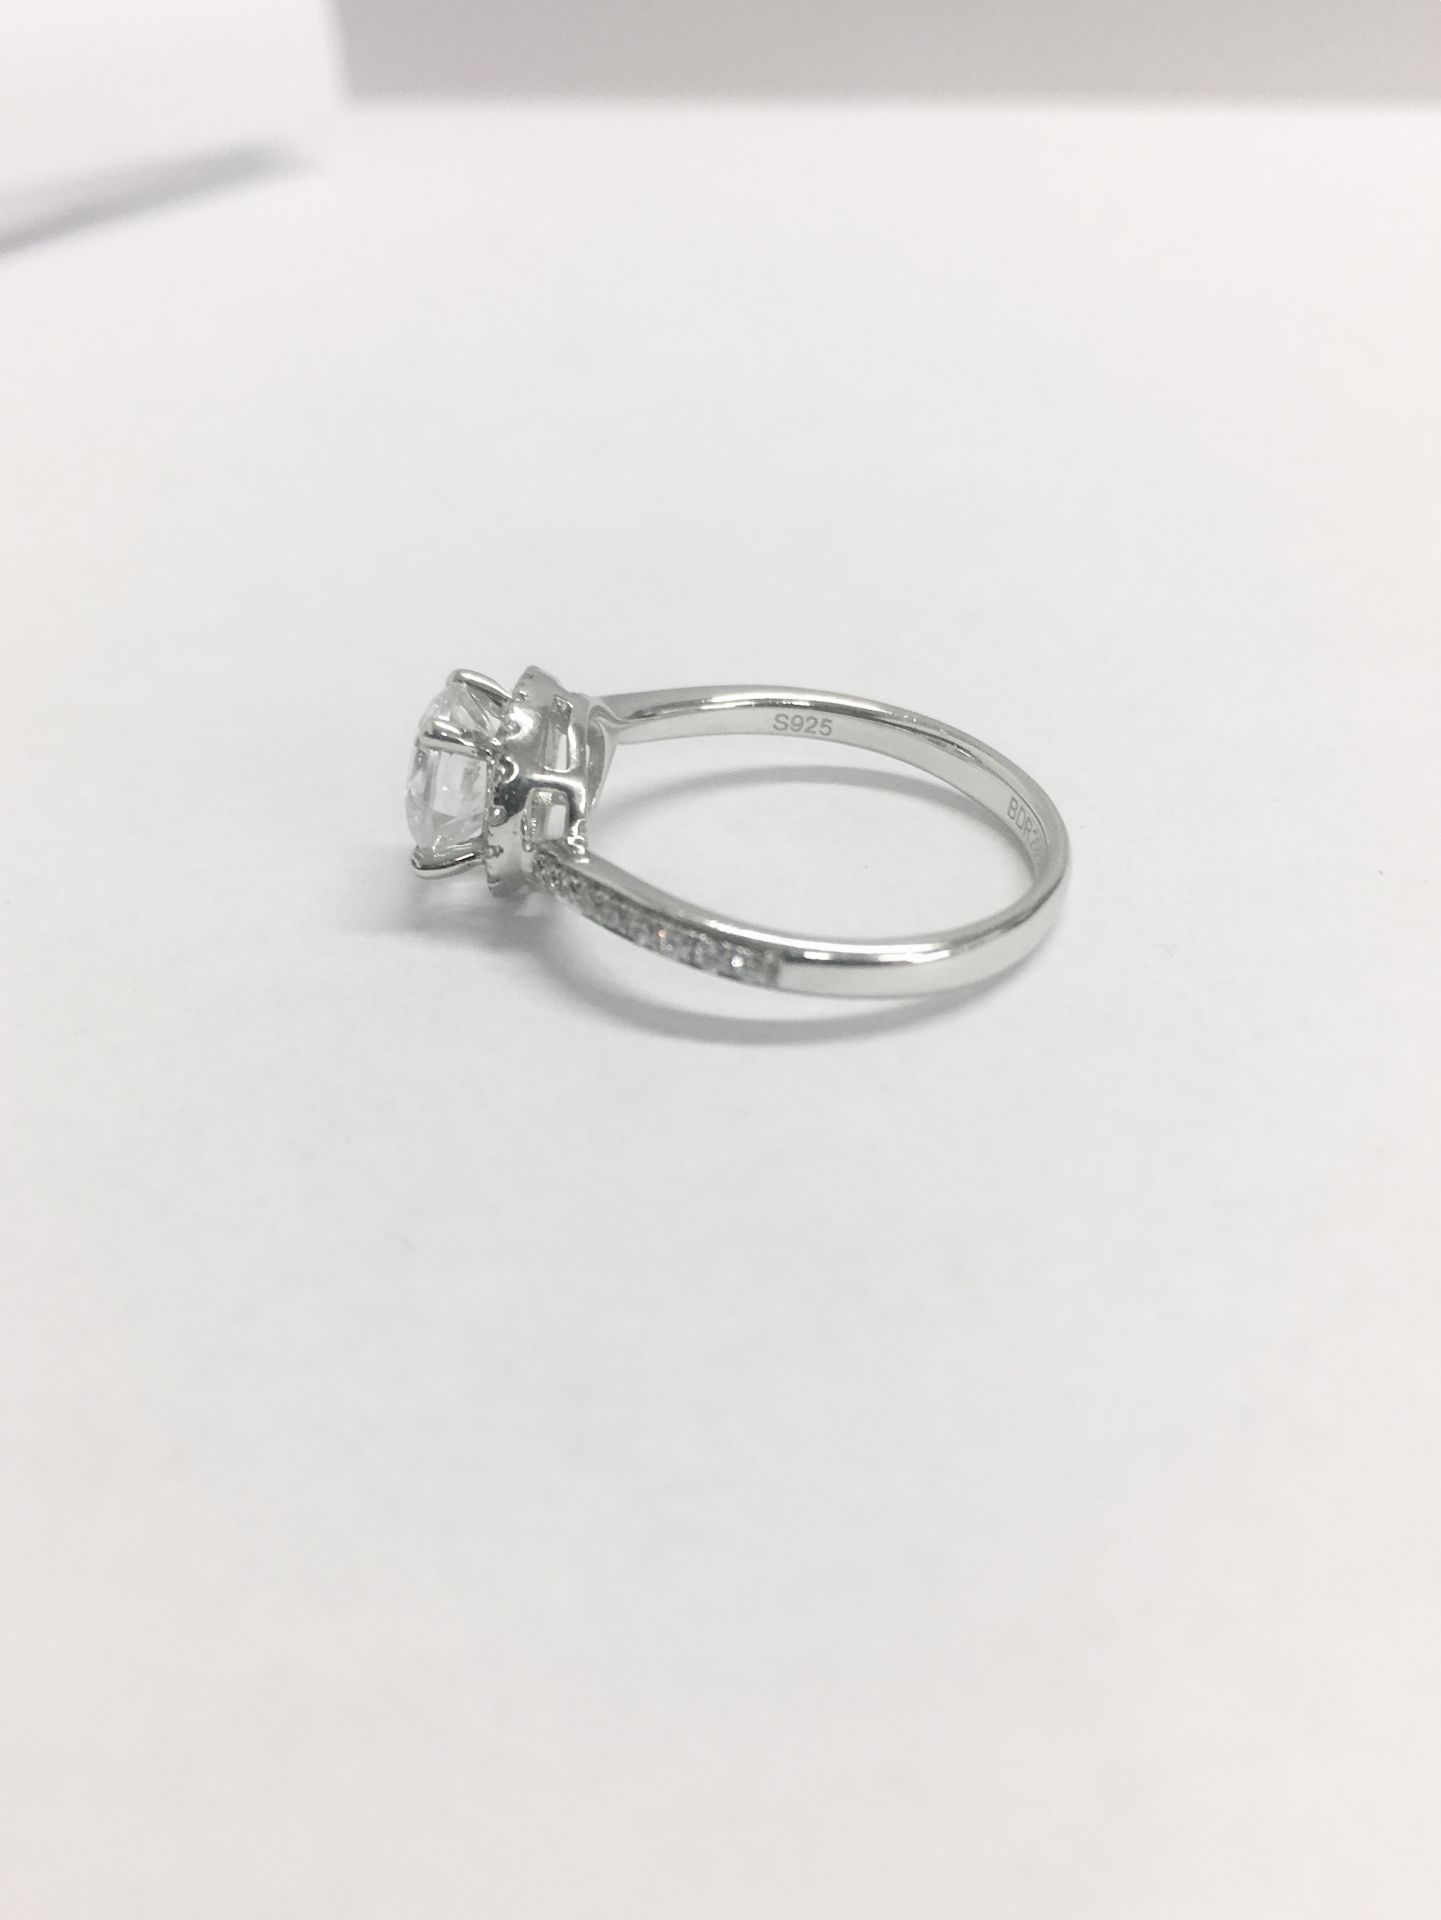 Platinum diamond solitaire ring,0.50ct brilliant cut diamond D colour vs clarity,,36 round diamond h - Image 4 of 7